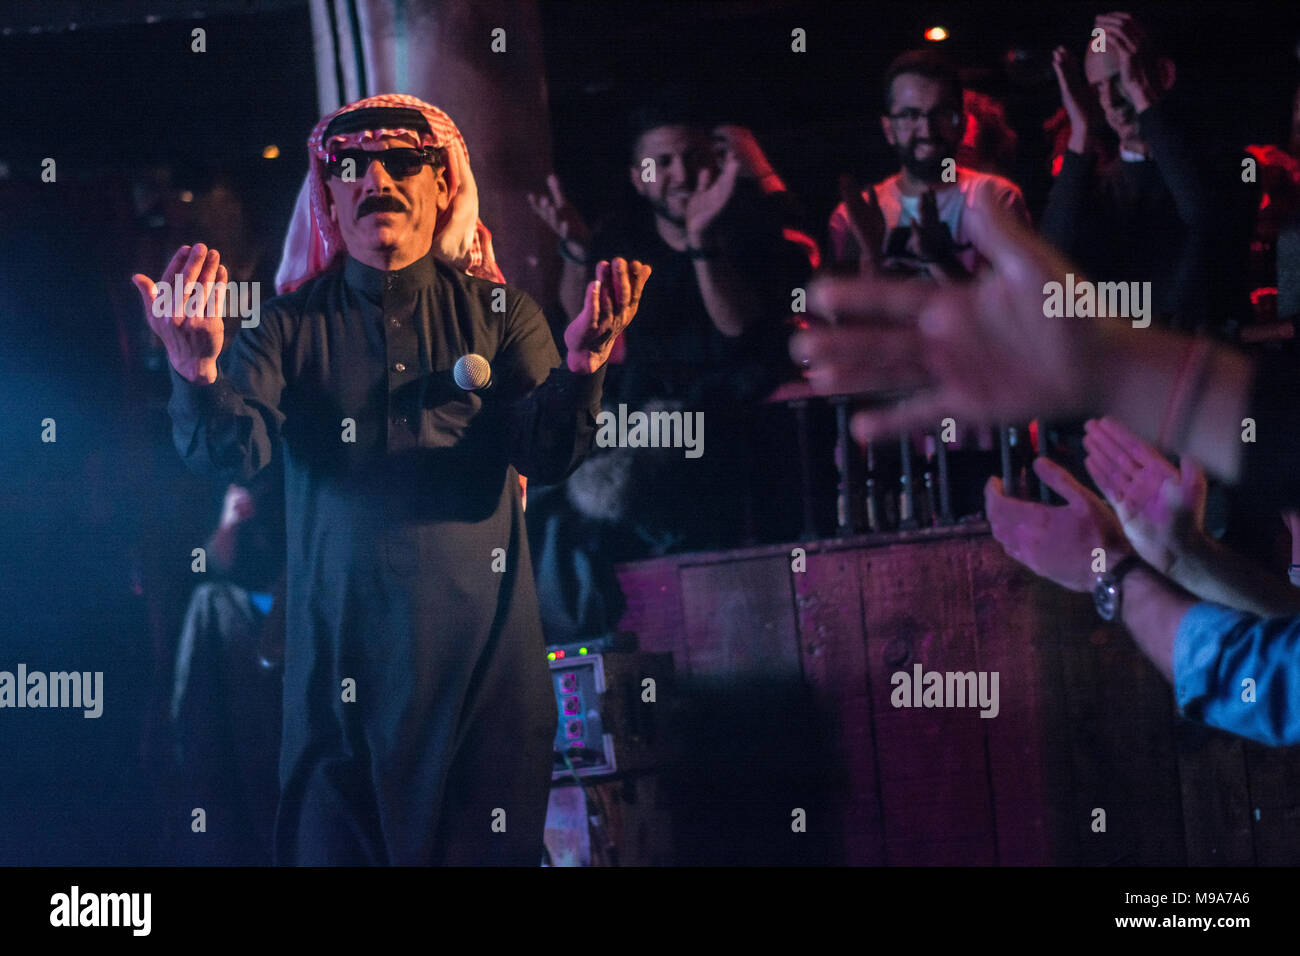 Madrid, Spain. 23rd March, 2018. Omar Souleyman concert in Madrid, Spain Credit: Alberto Sibaja Ramírez/Alamy Live News Stock Photo